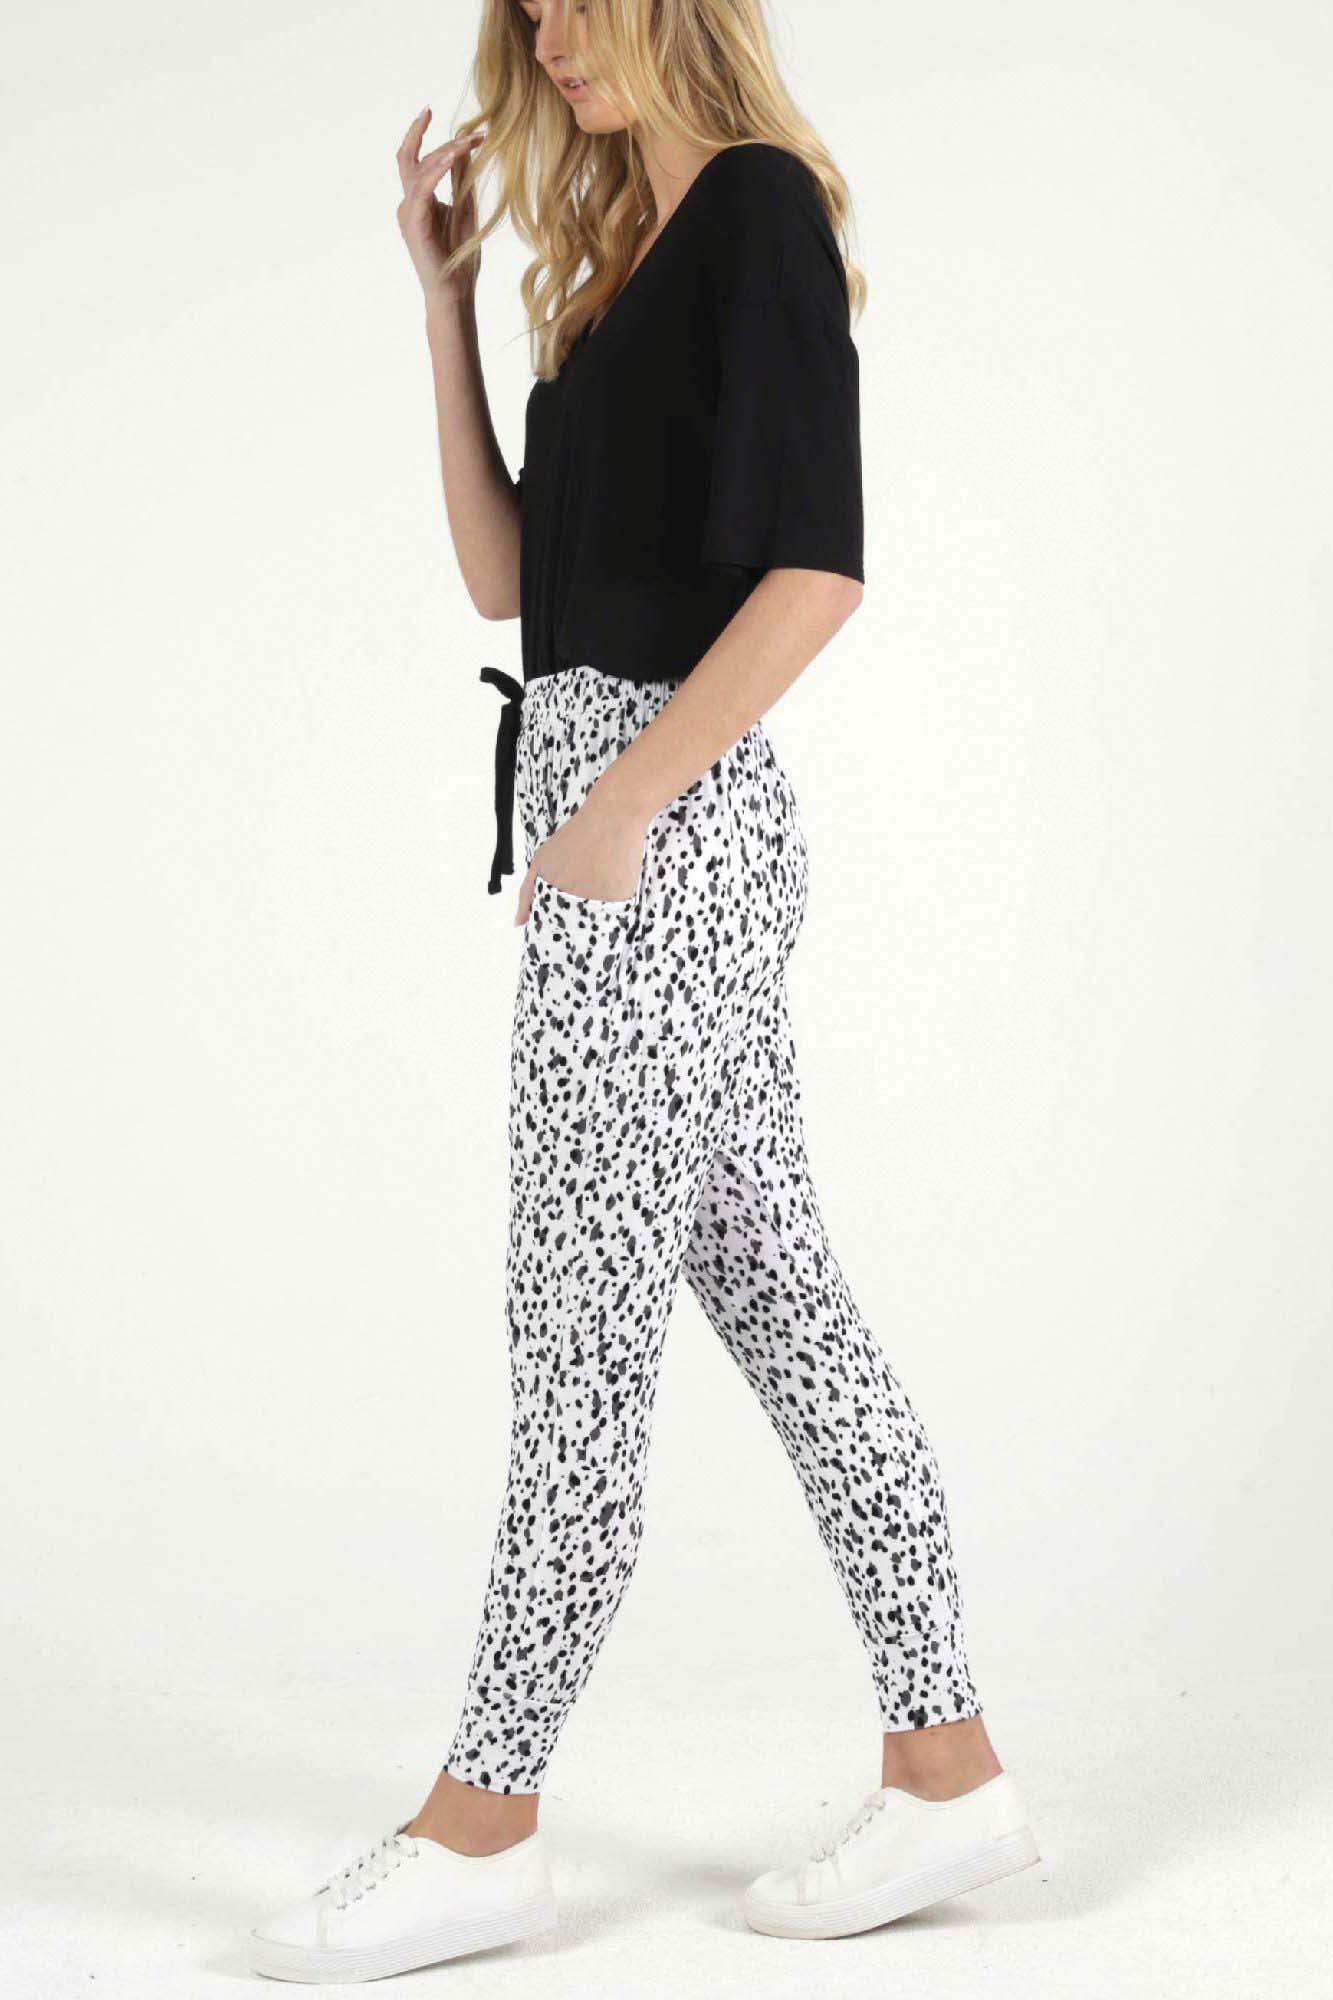 Betty Basics Barcelona Pants in Dalmatian Print - Hey Sara